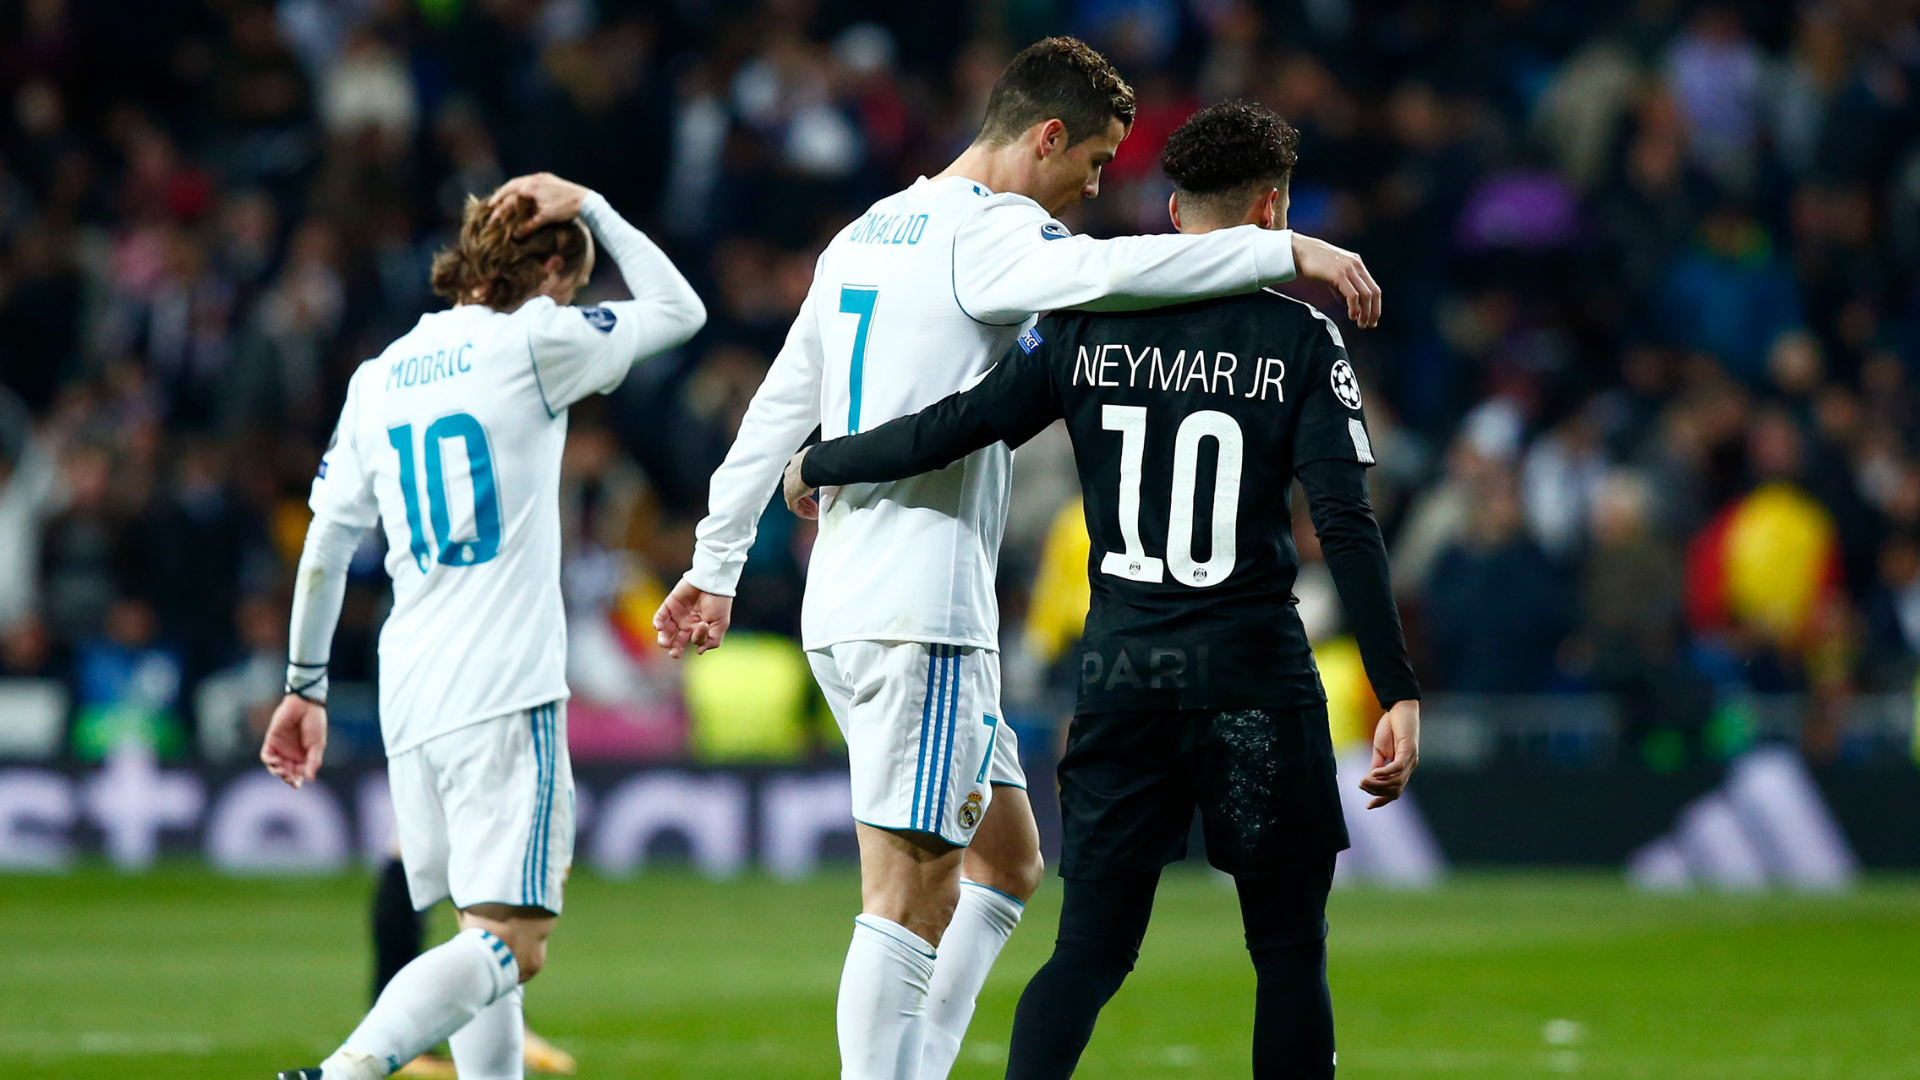 Neymar e Cristiano Ronaldo se enfrentaram na Champions League